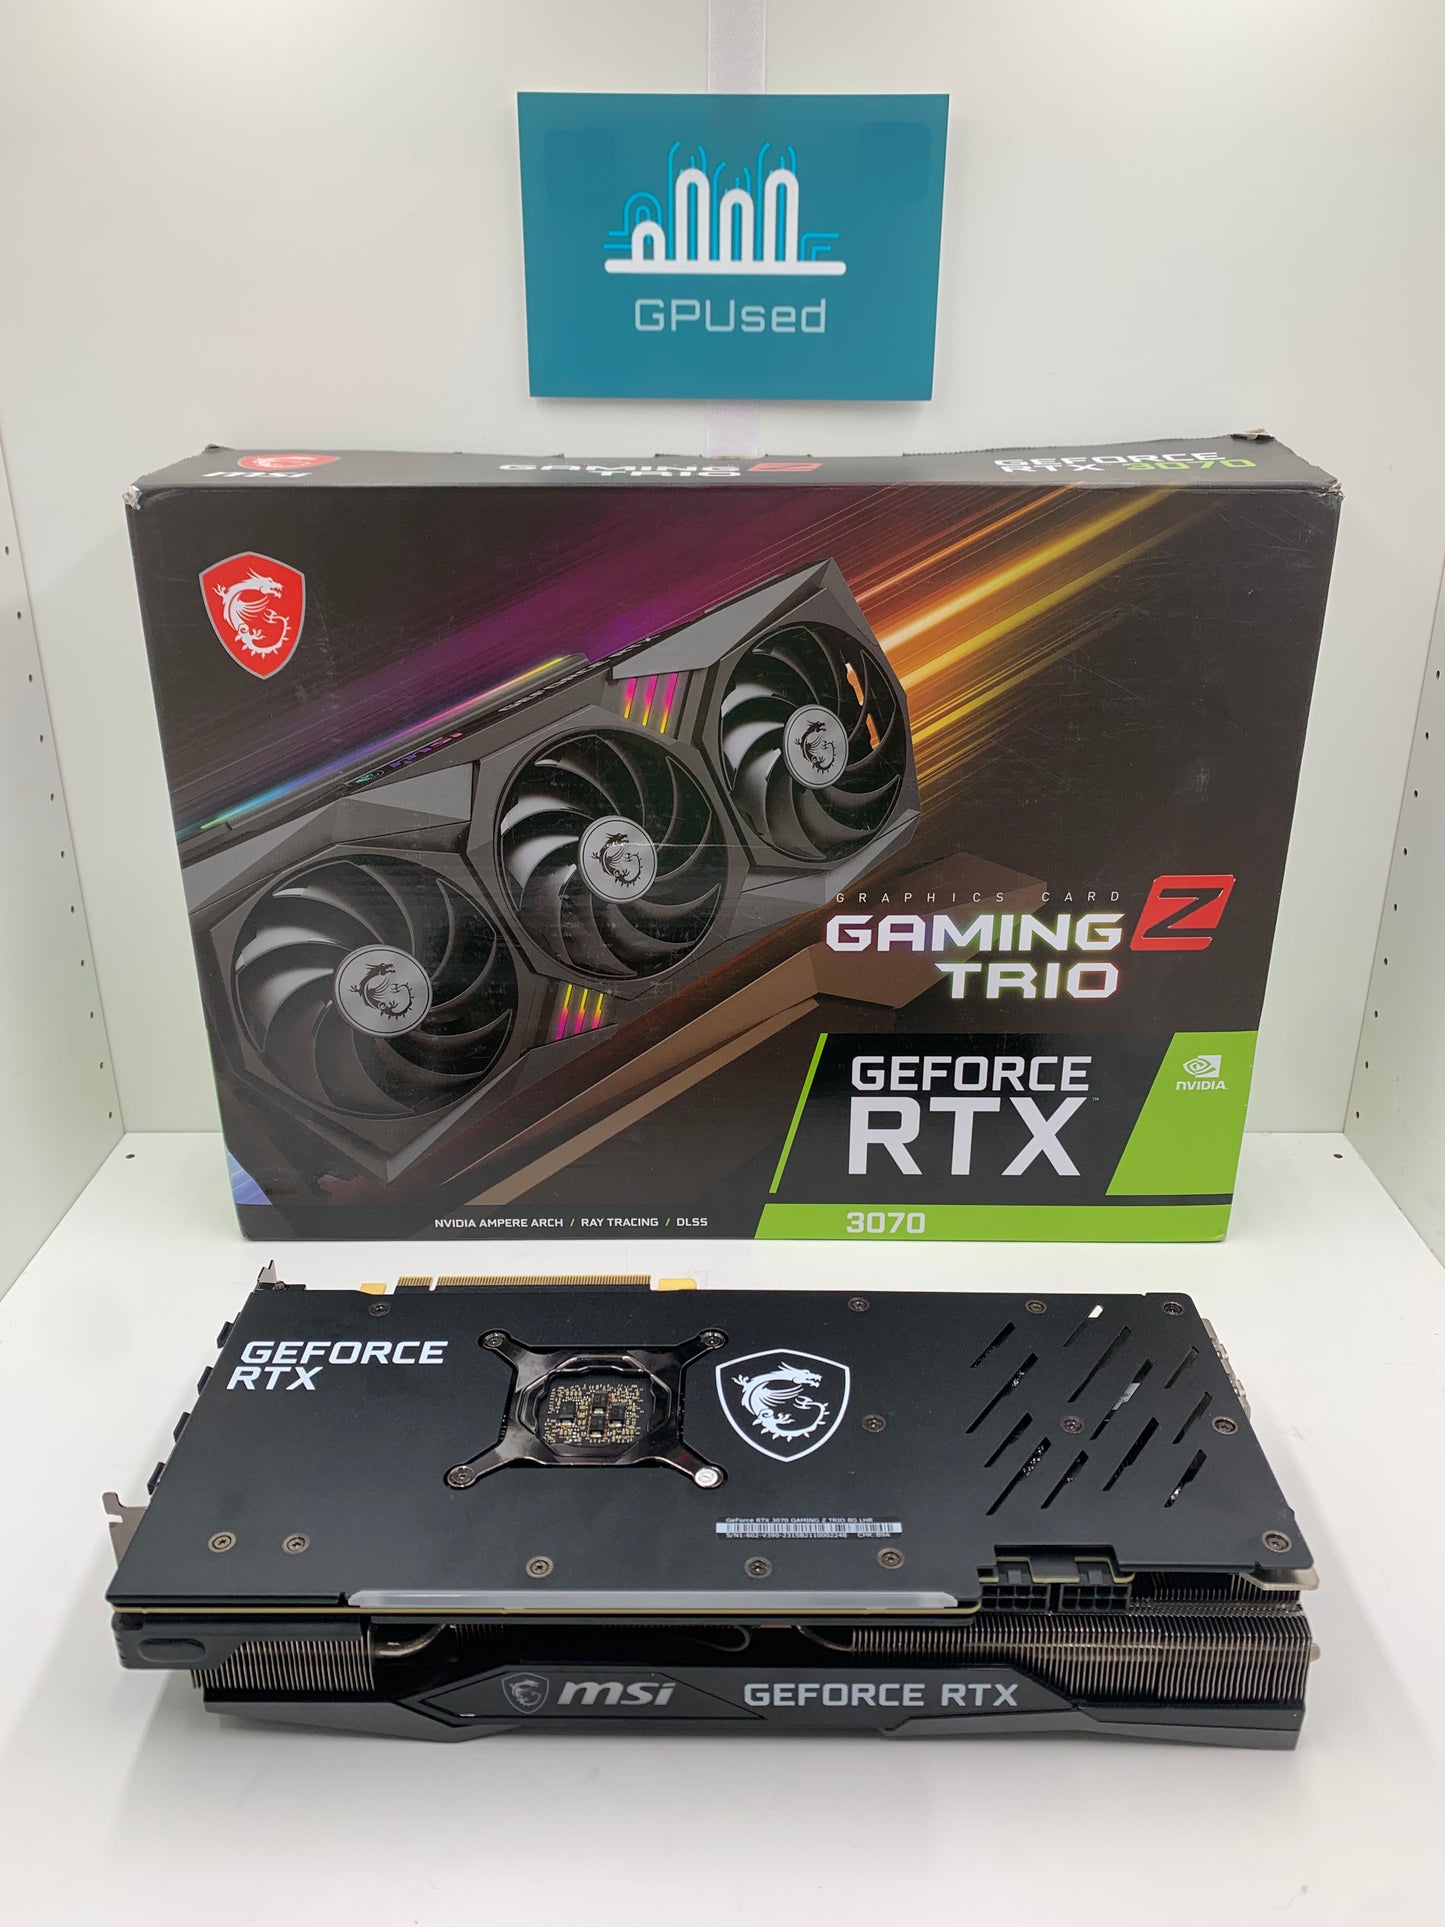 MSI Nvidia GeForce RTX 3070 Gaming Z Trio 8GB GDDR6 - Was £339.99